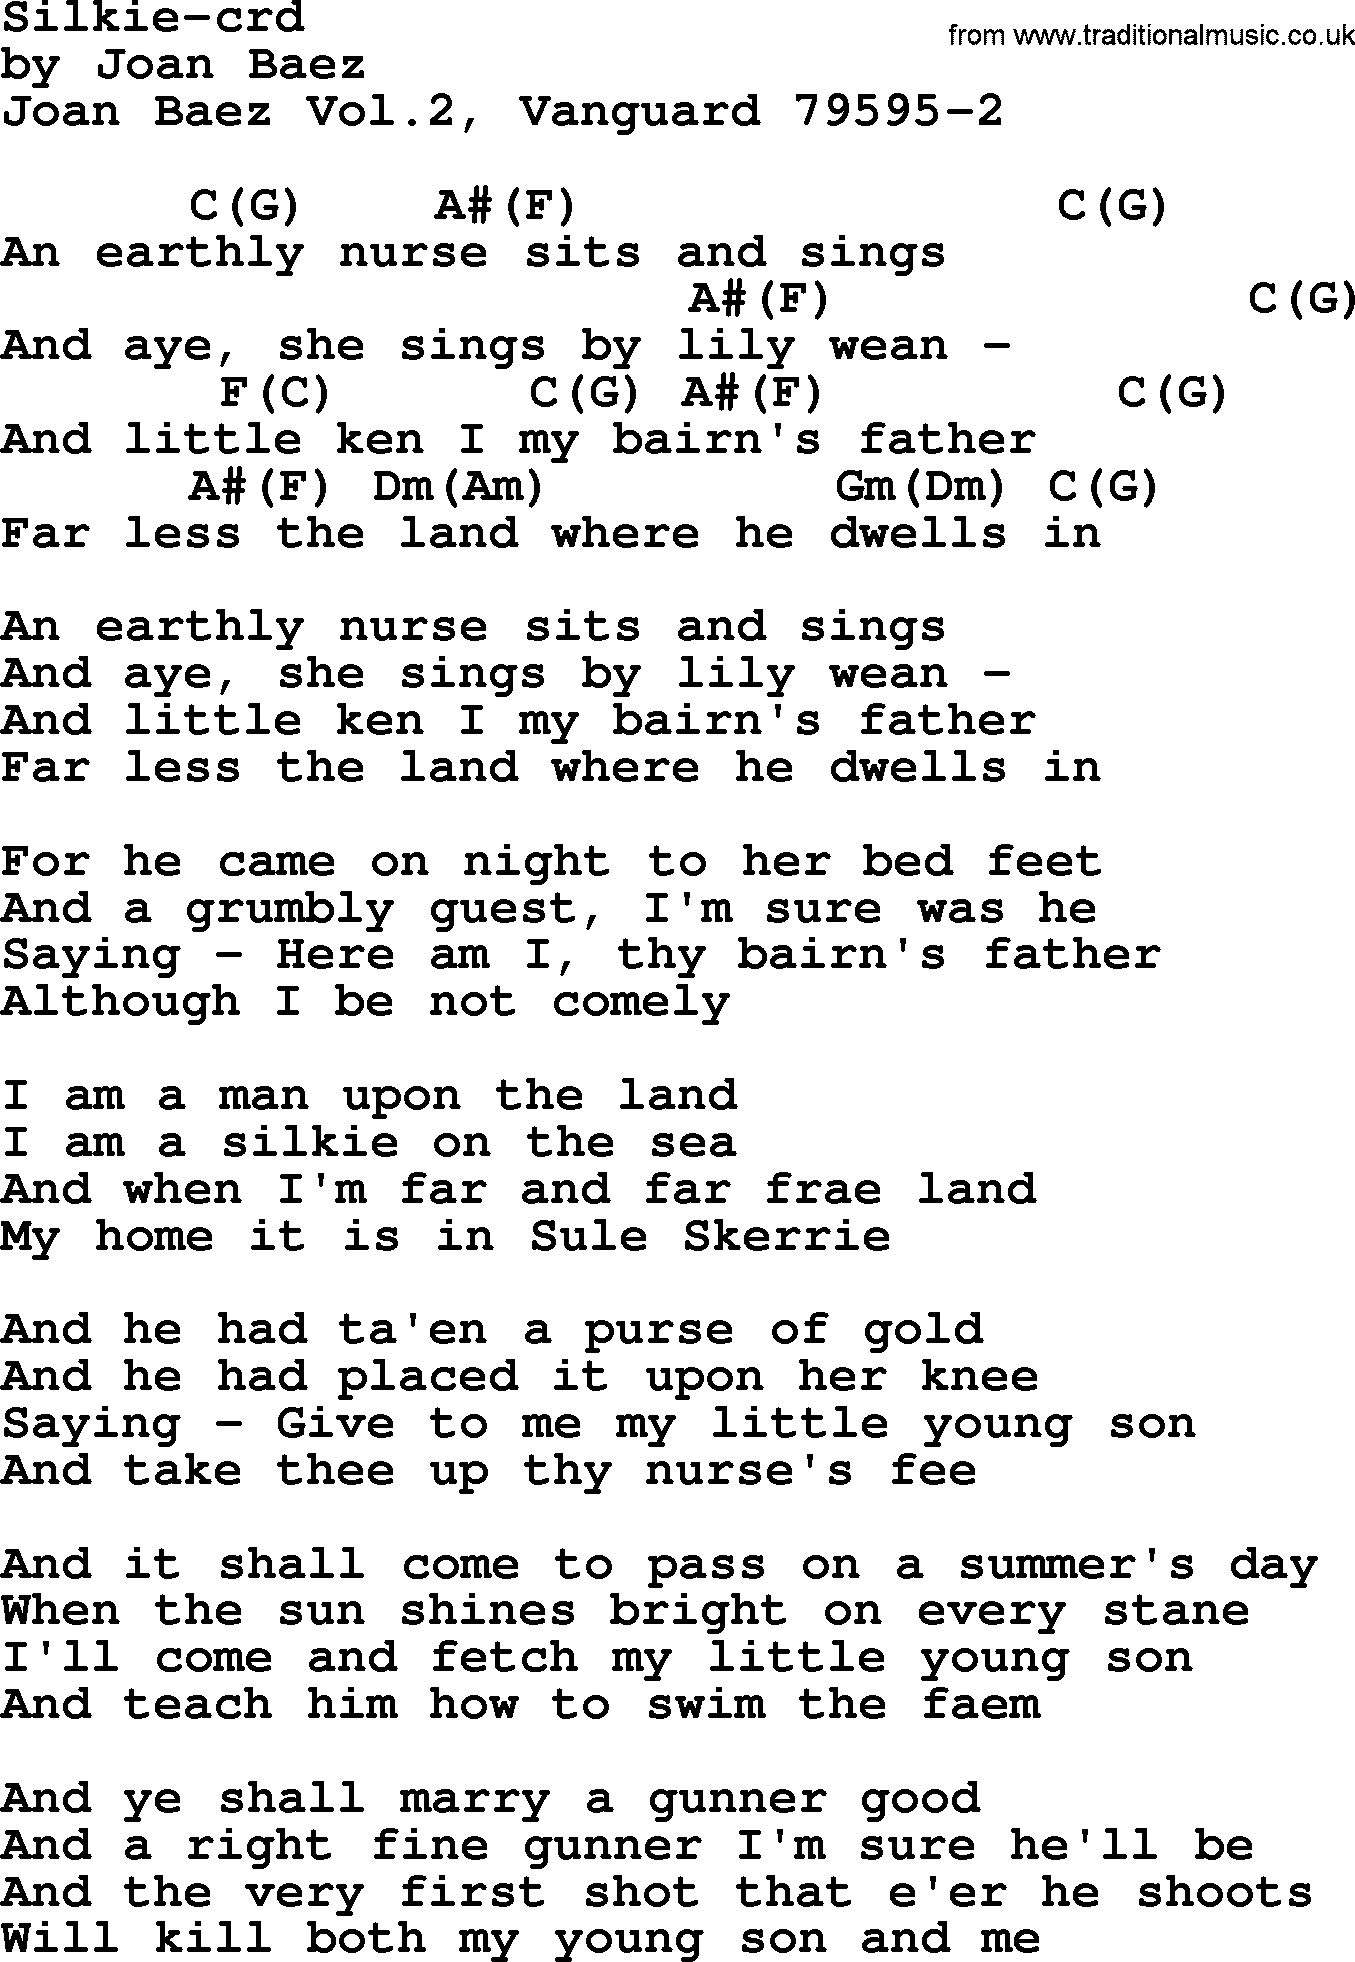 Joan Baez song Silkie lyrics and chords